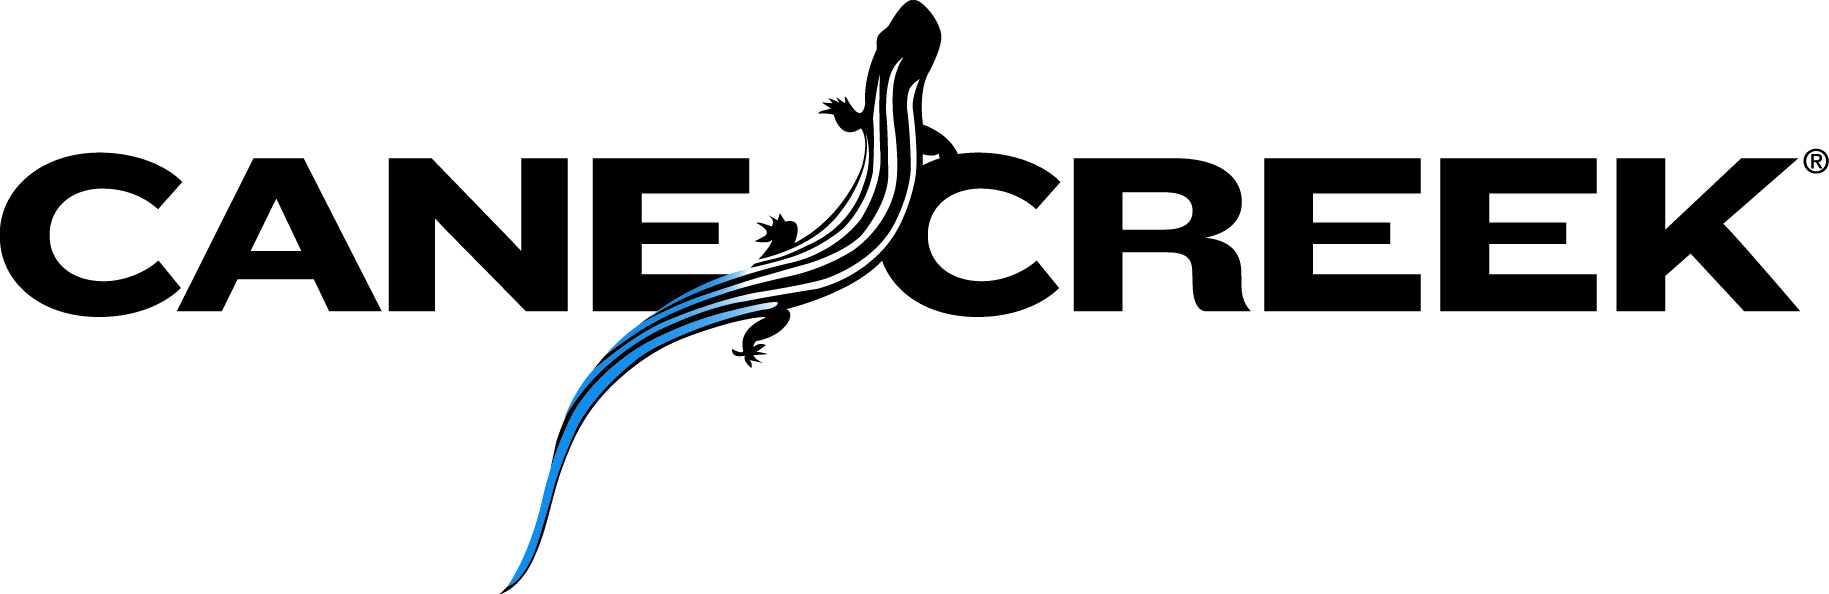 Cane Creek Concrete Logo photo - 1